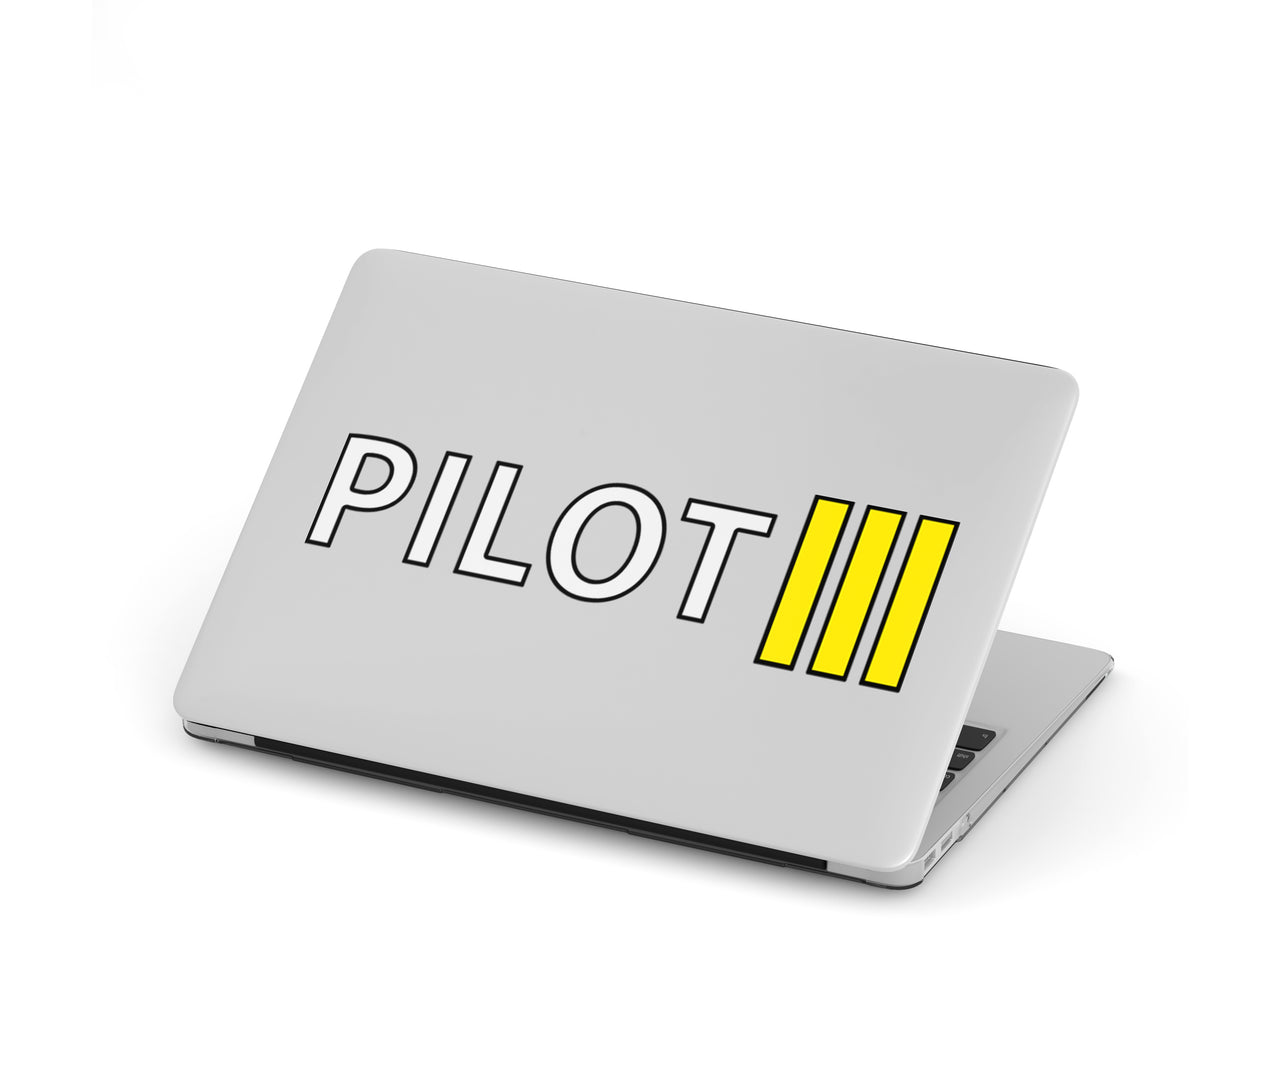 Pilot & Stripes (3 Lines) Designed Macbook Cases